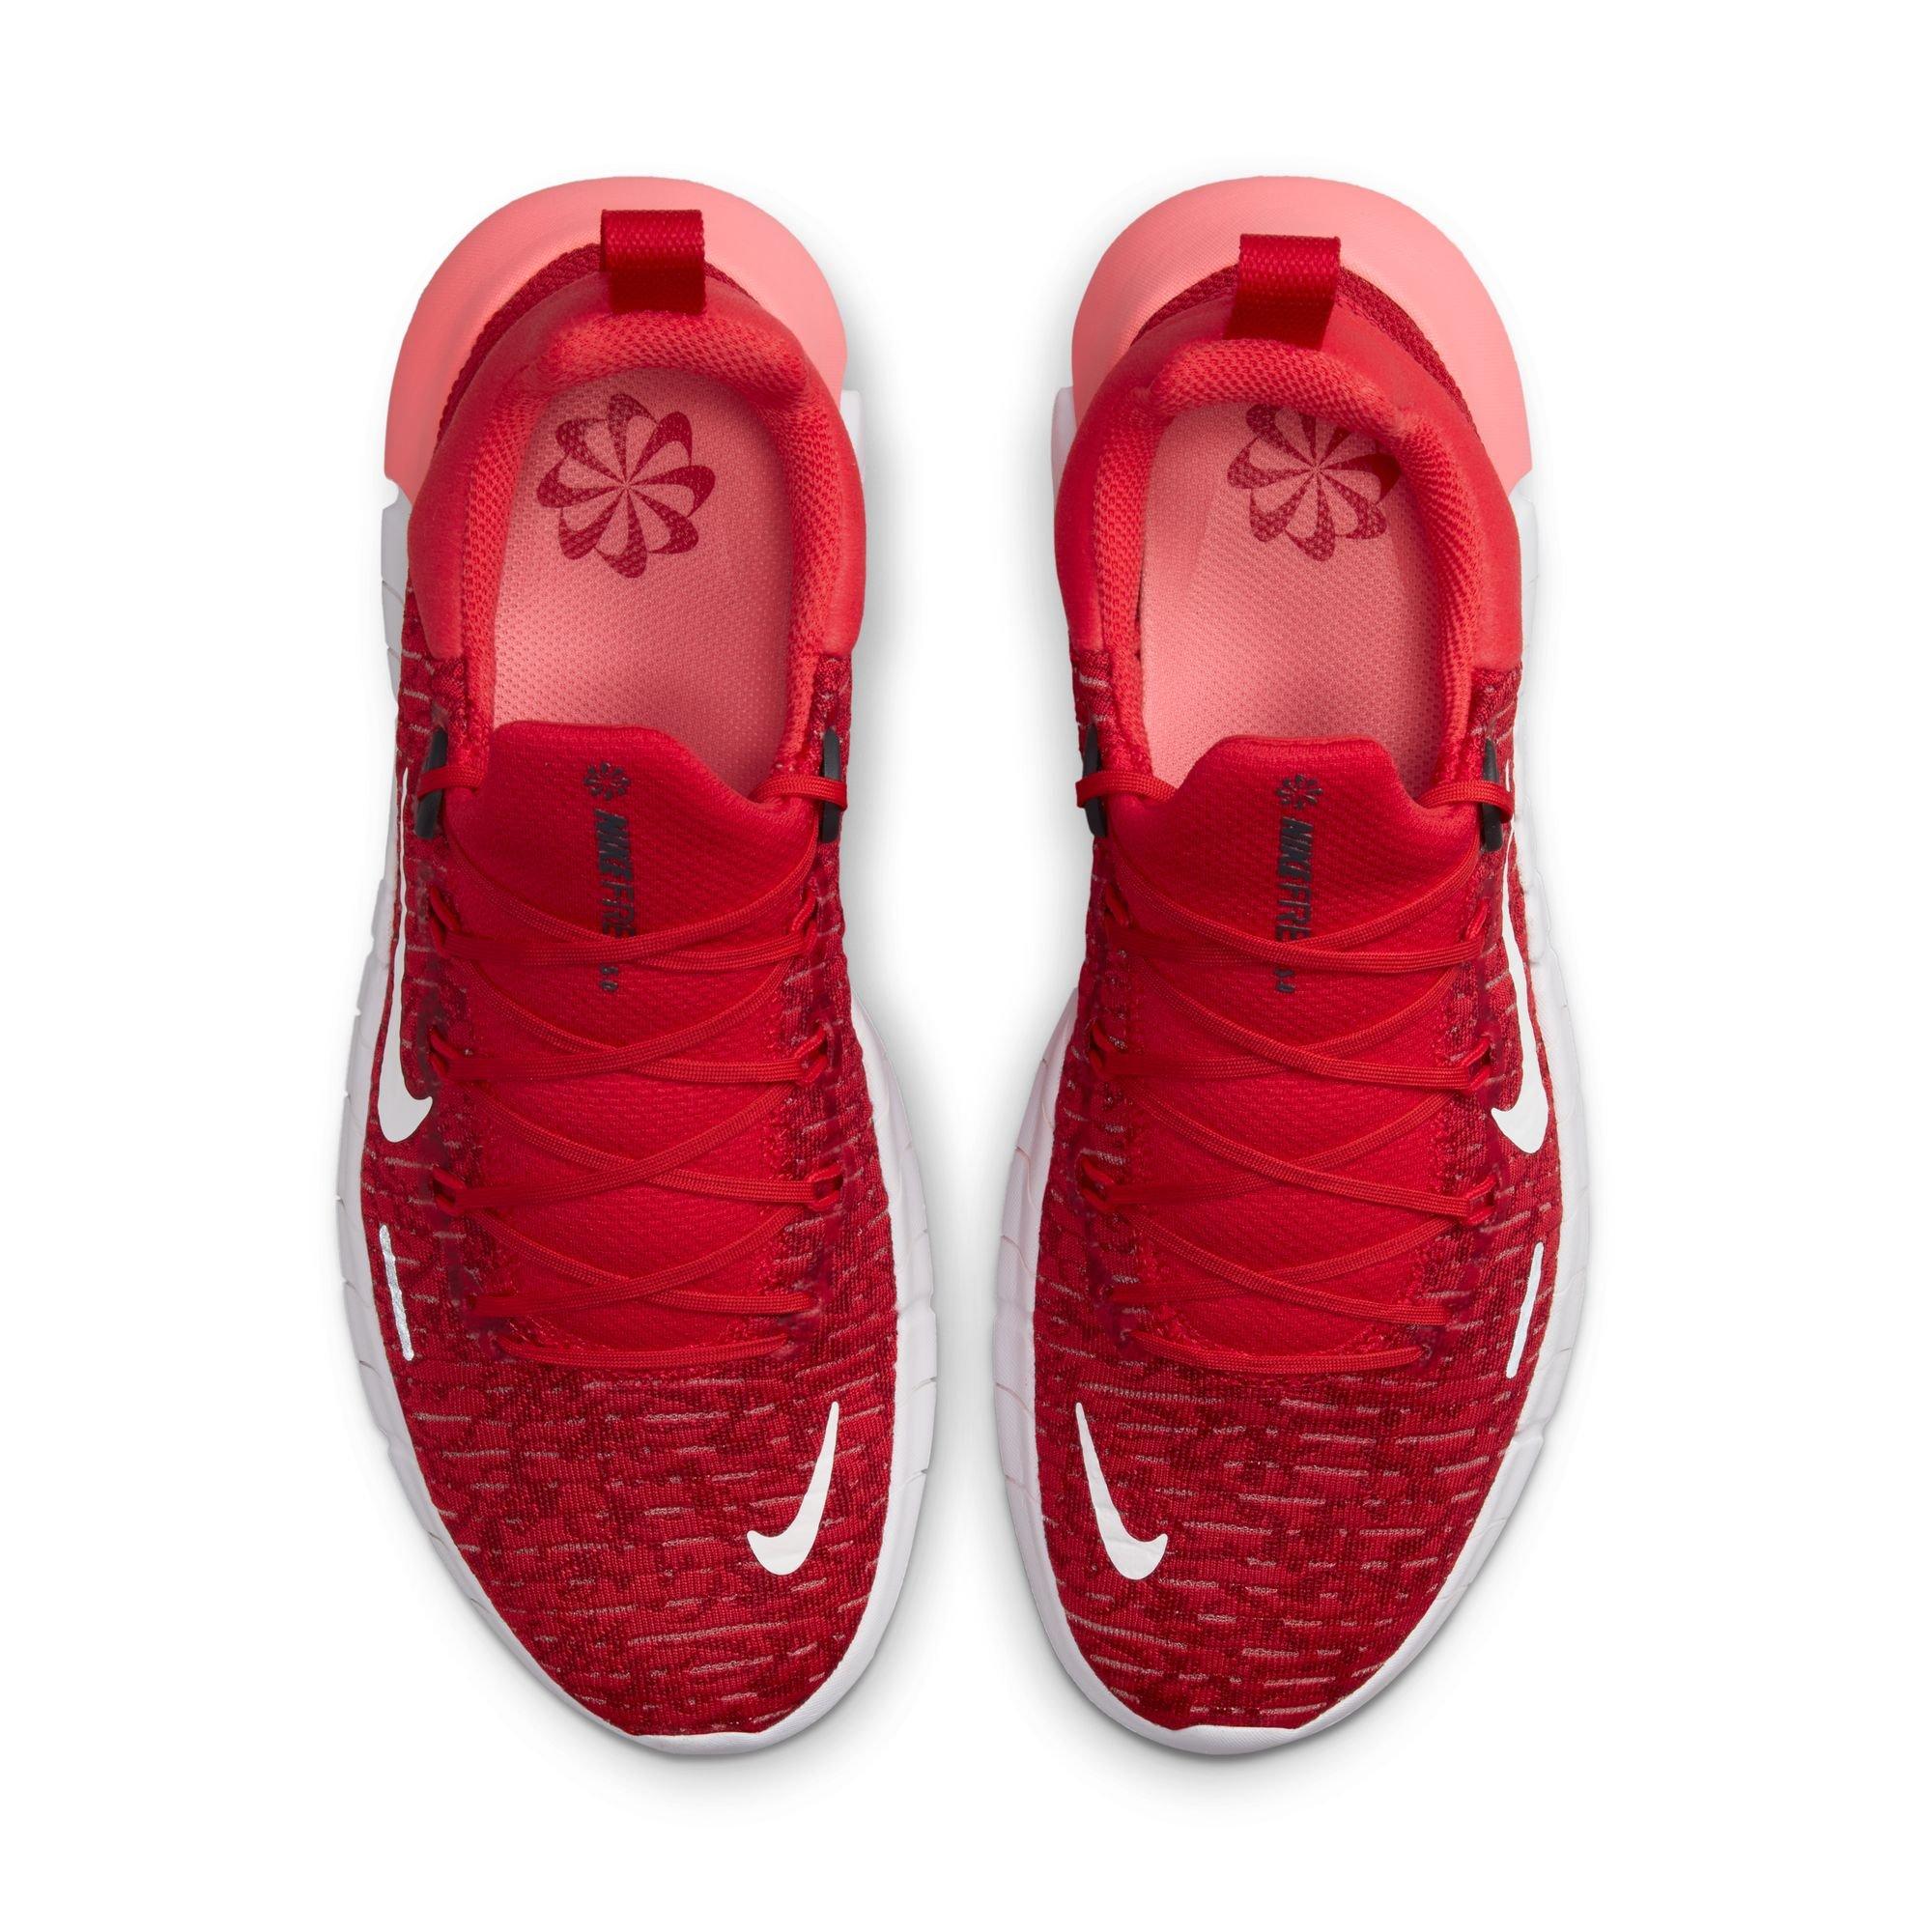 voor studio premie Nike Free Run 5.0 "University Red/White/Gym Red" Women's Road Running Shoe